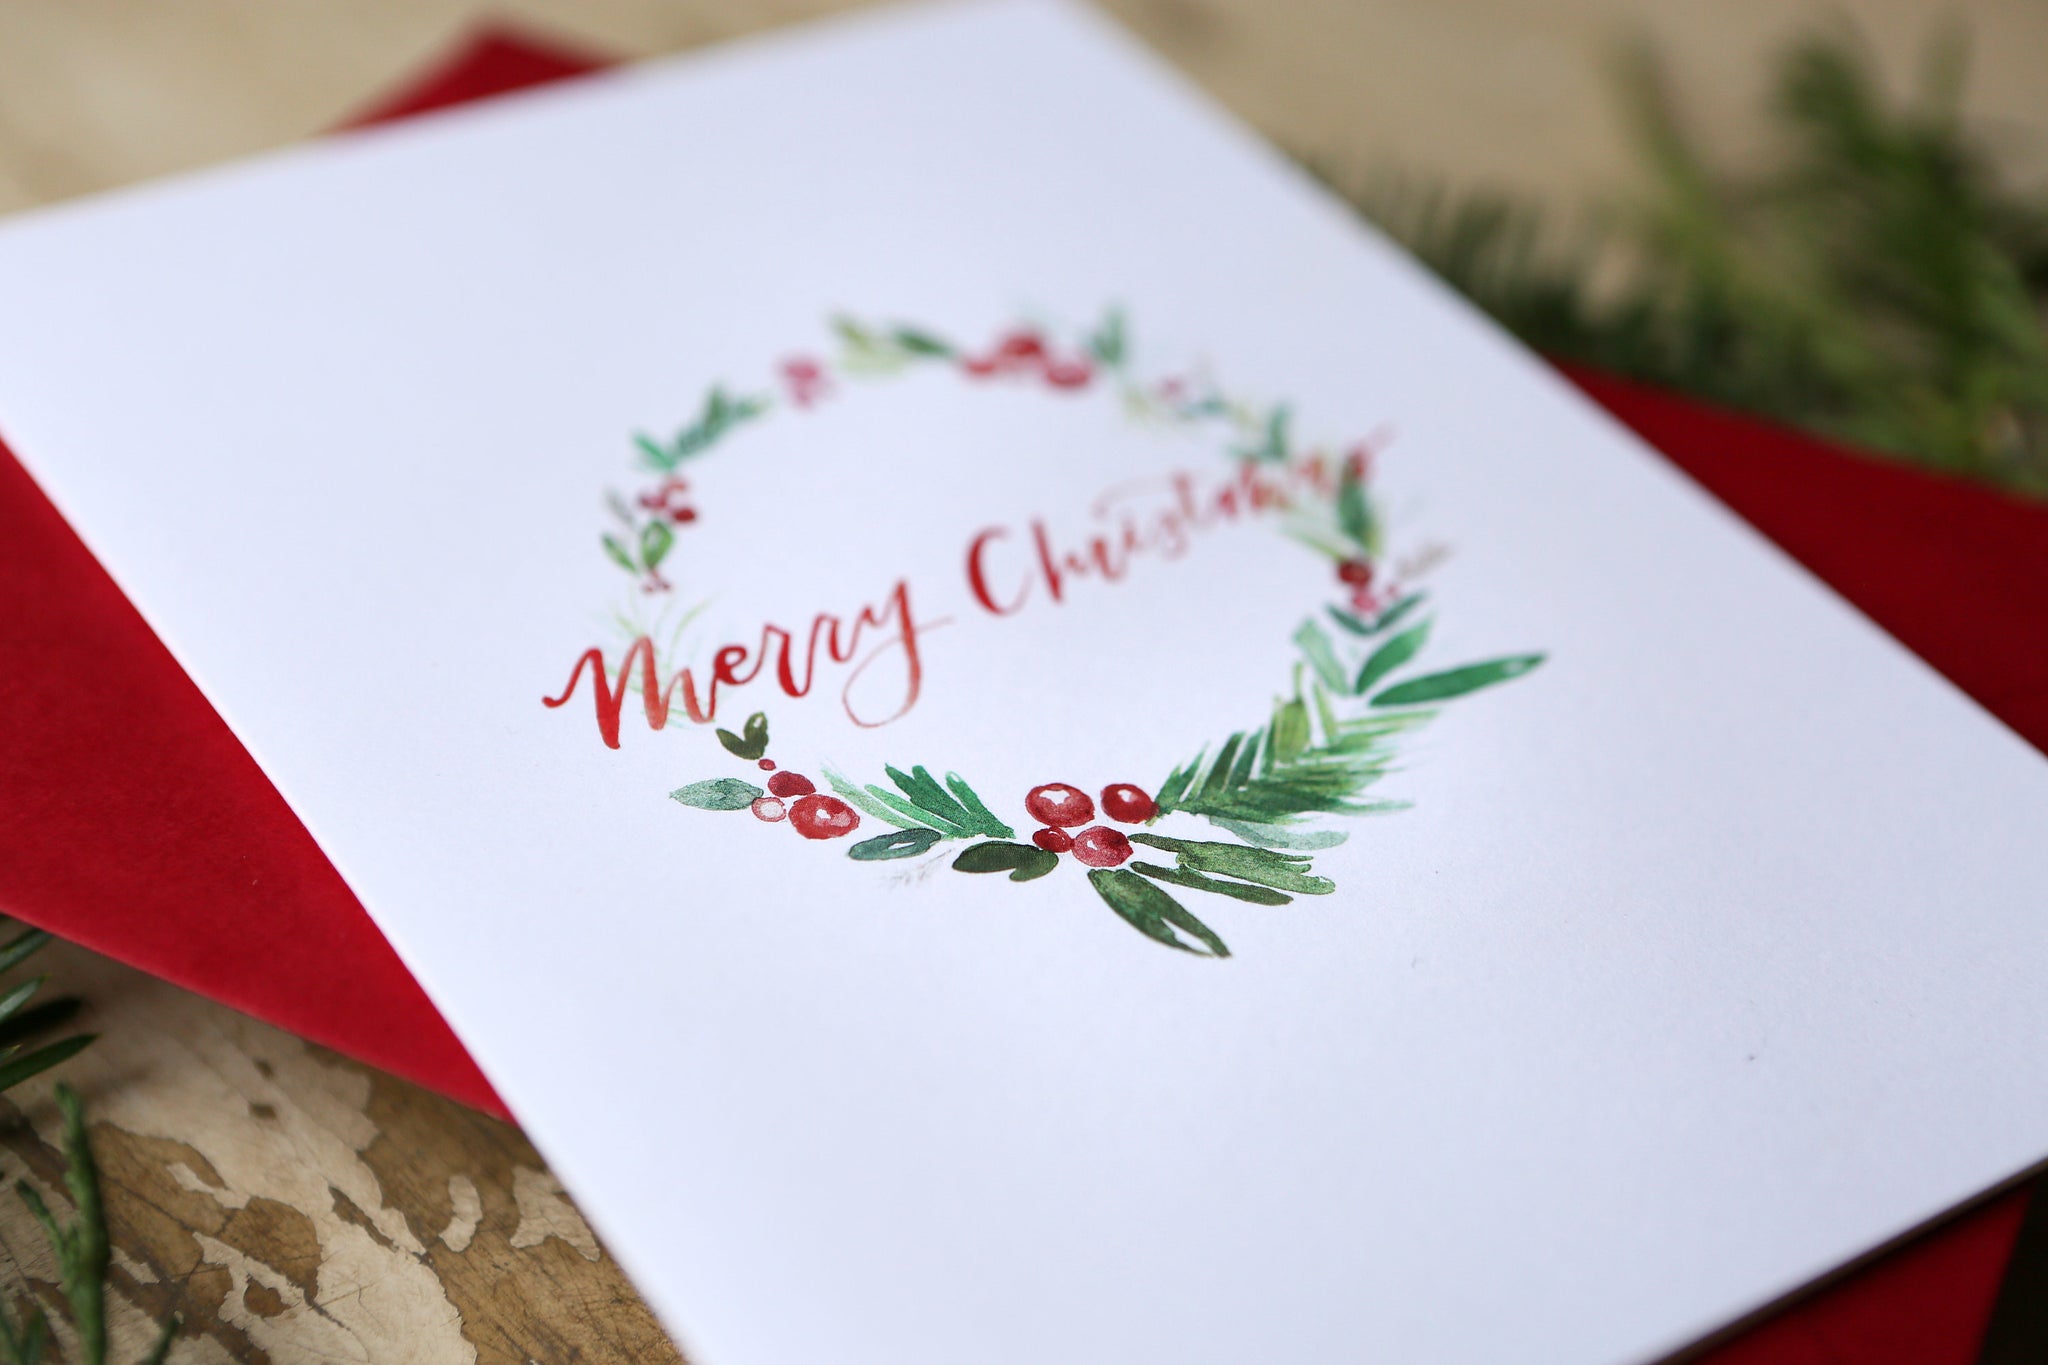 Christmas Card | Merry Christmas Watercolor Wreath